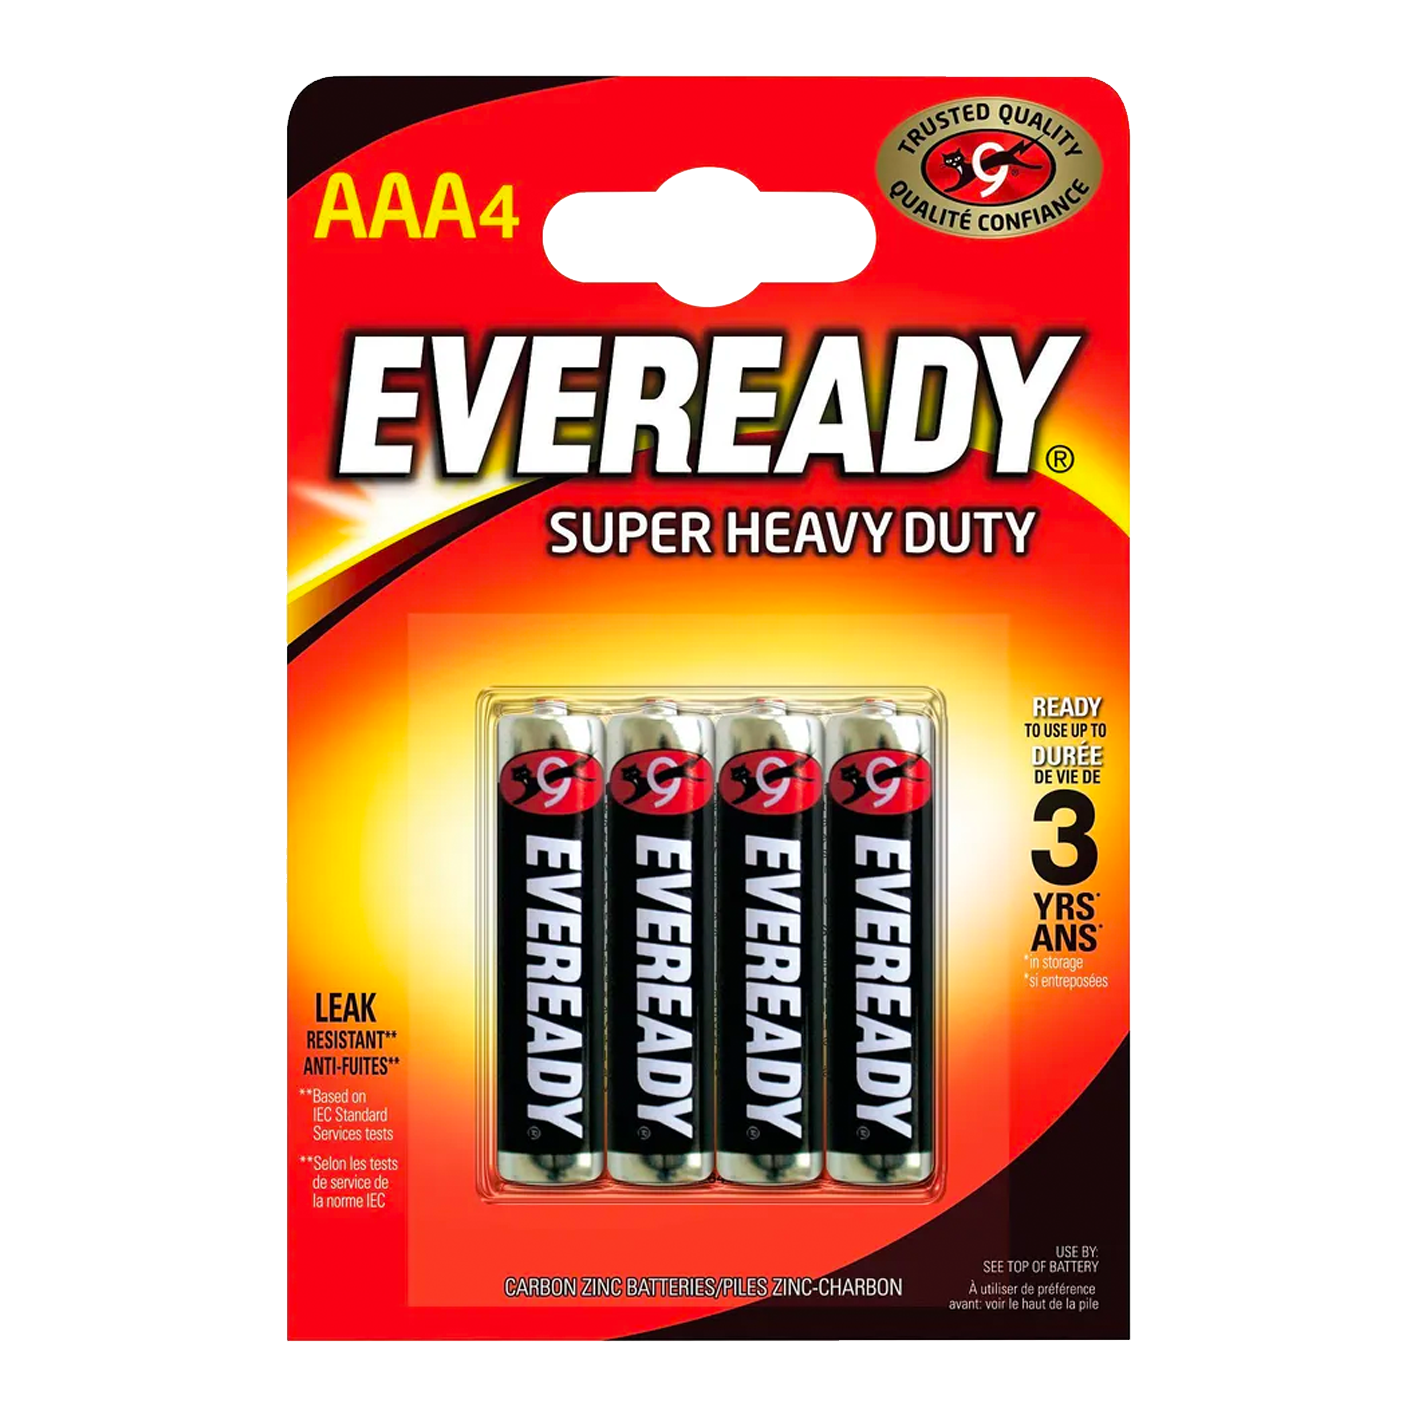 Eveready AAA Super Heavy Duty, Pack of 4